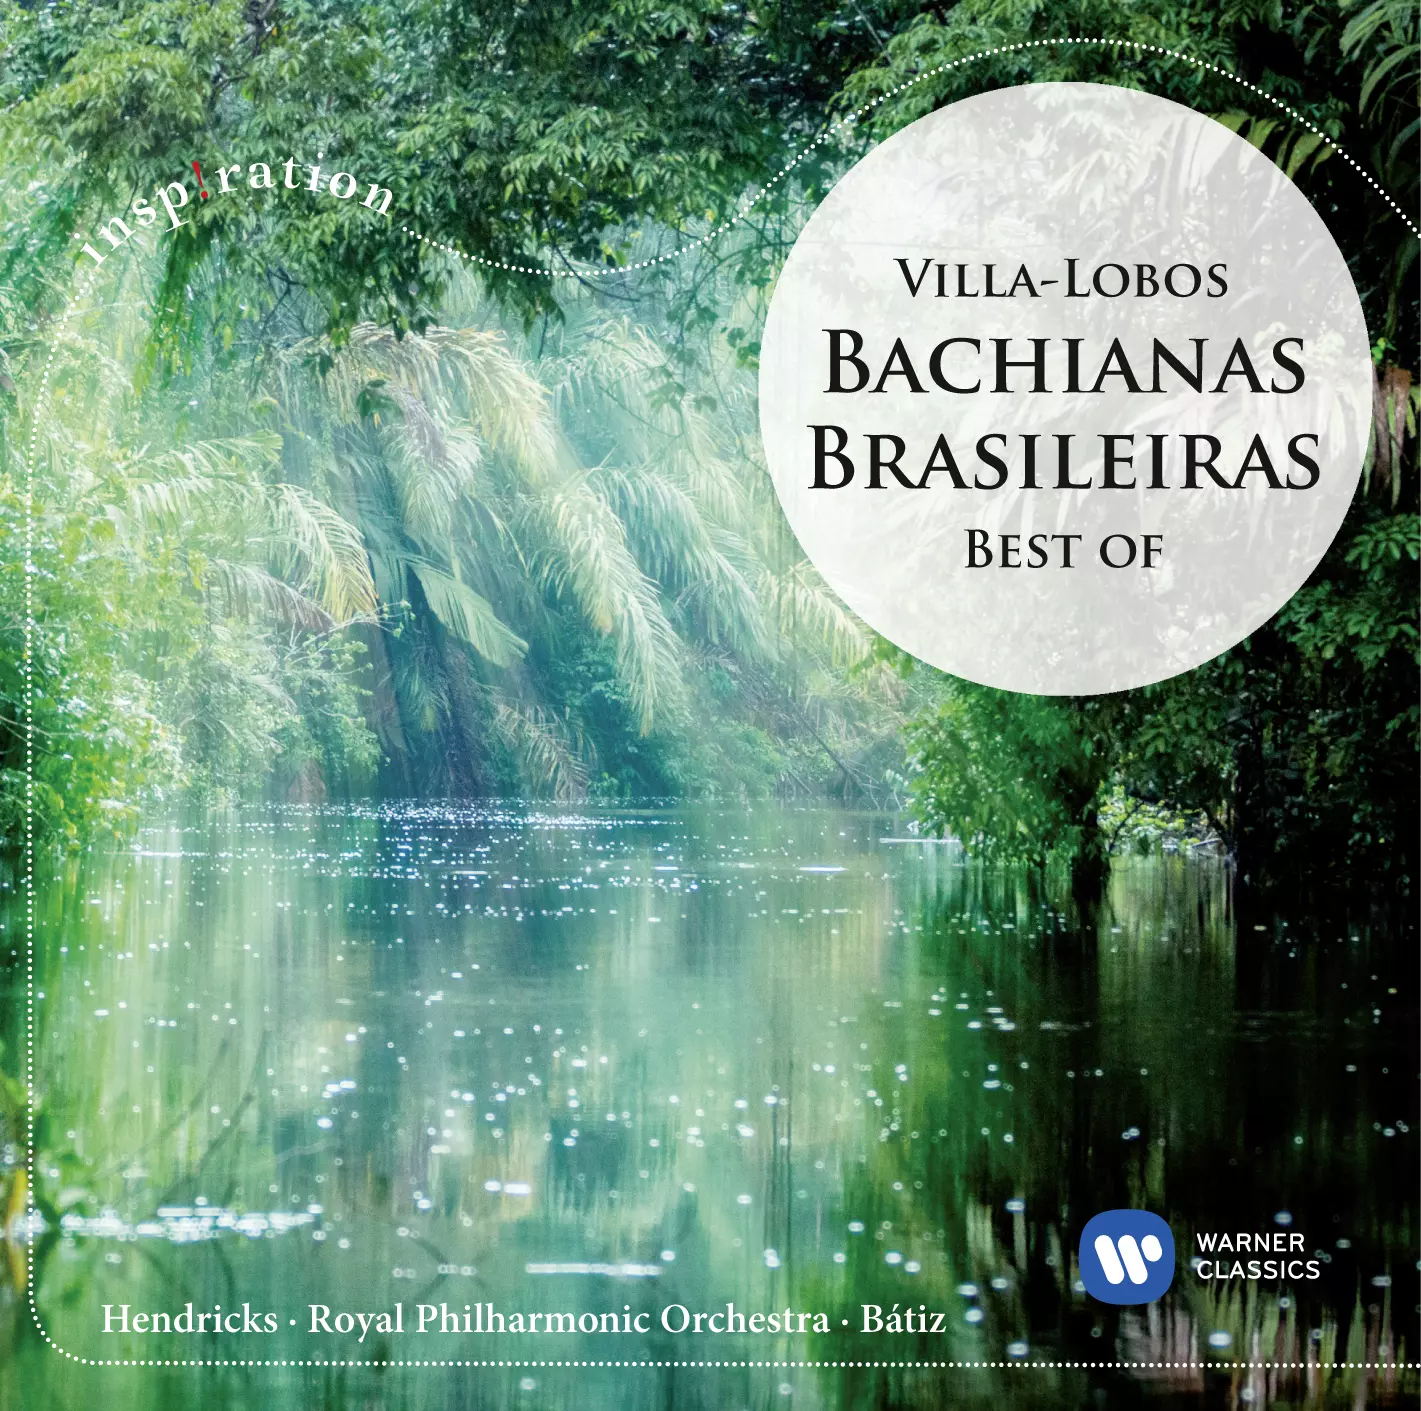 Bachianas Brasileiras - Best of Villa-Lobos